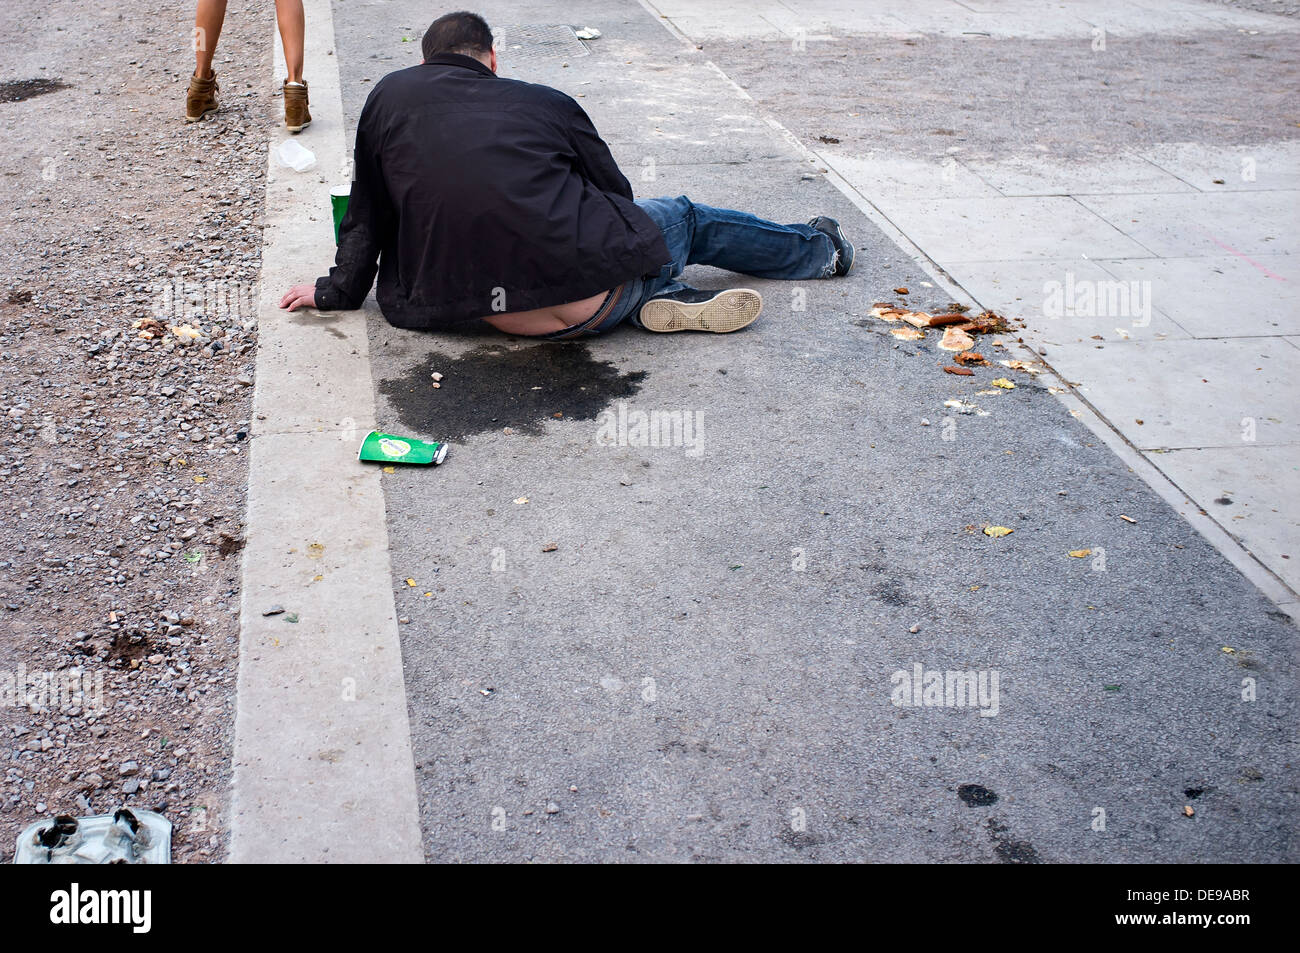 Drunk man sitting on pavement Banque D'Images